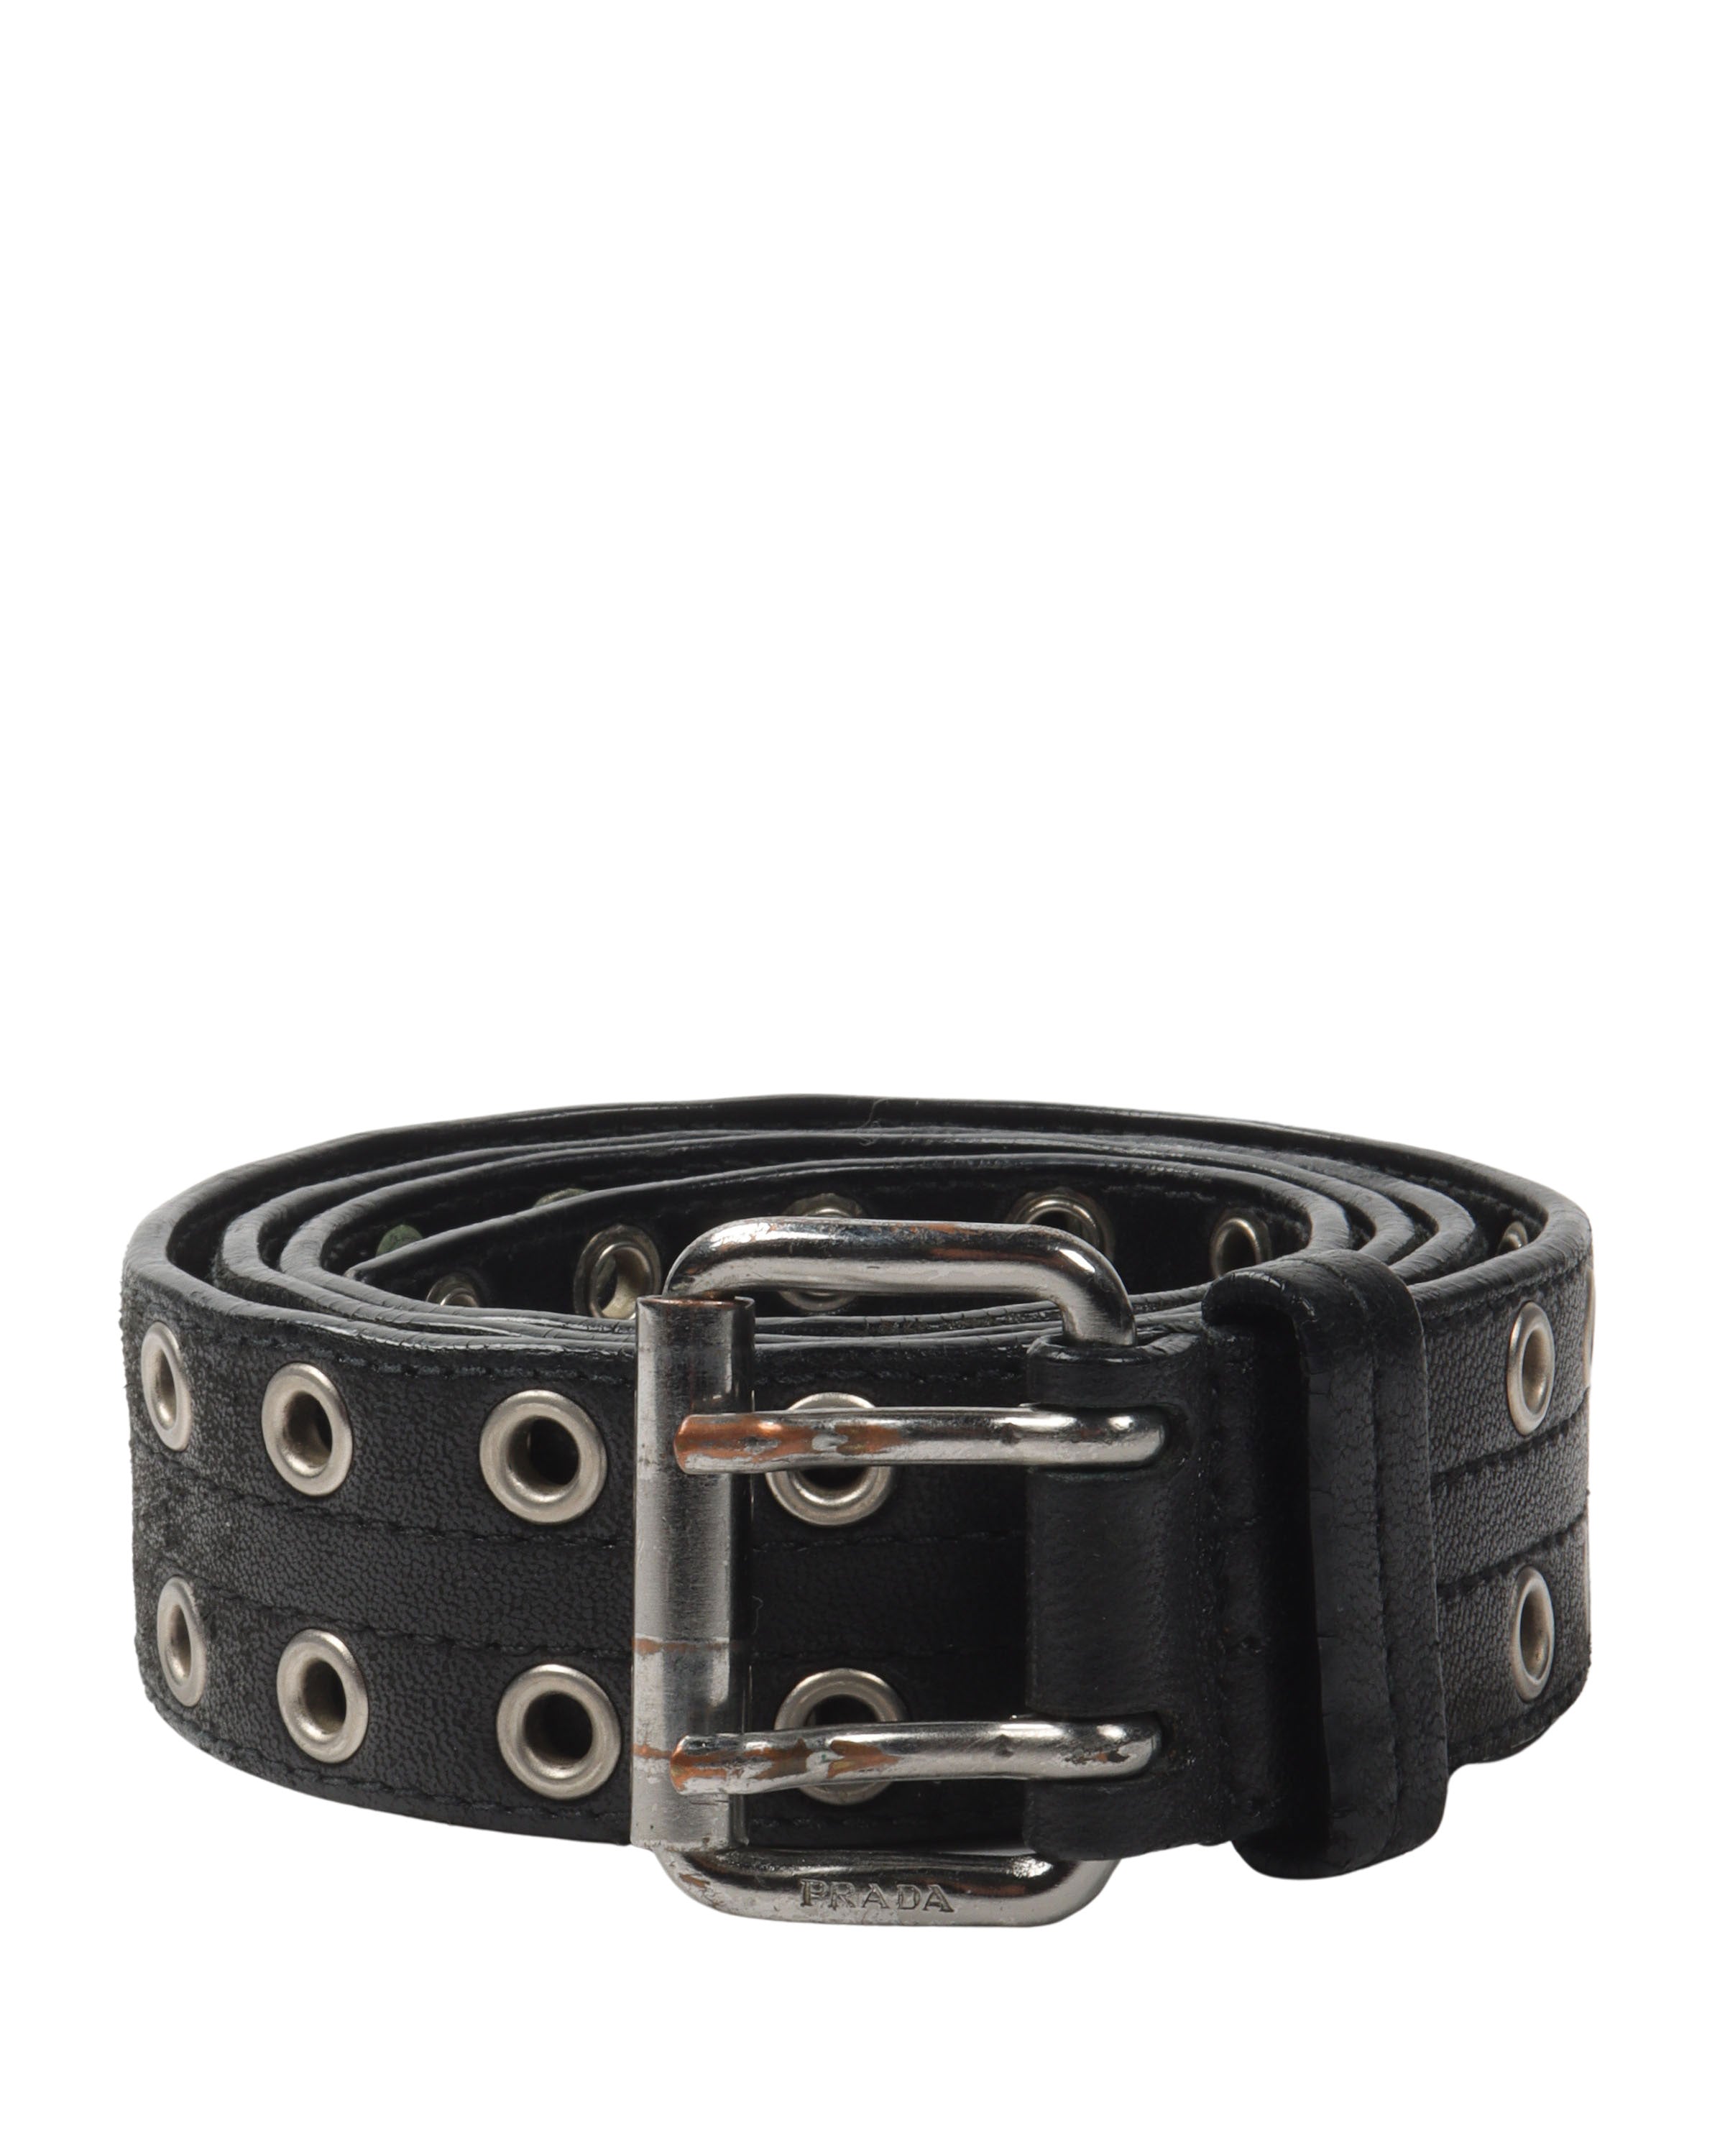 Leather Grommet Belt